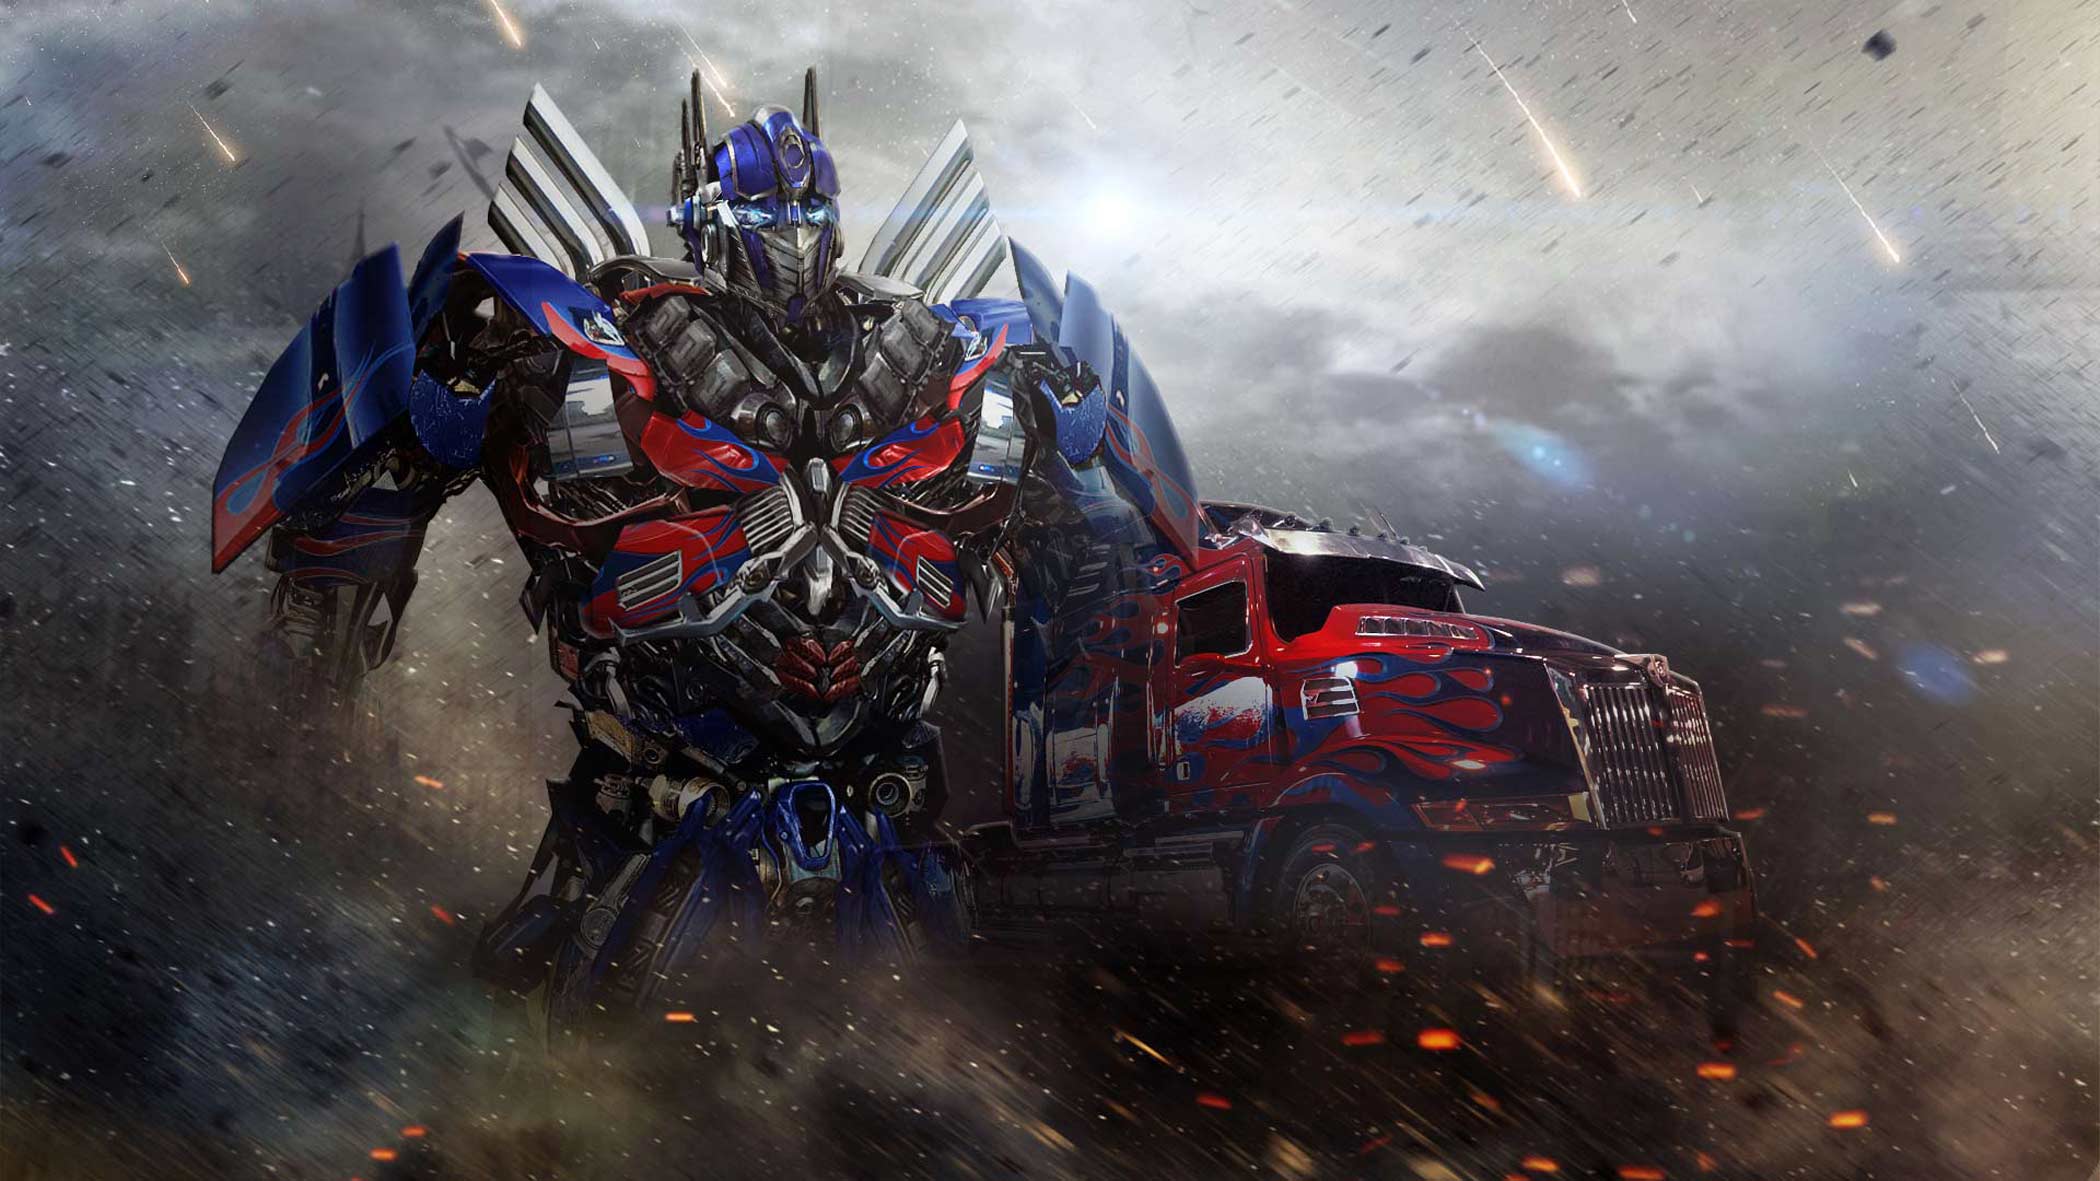 Download Transformers 4 Wallpaper Desktop #tbelm masbradwall.com